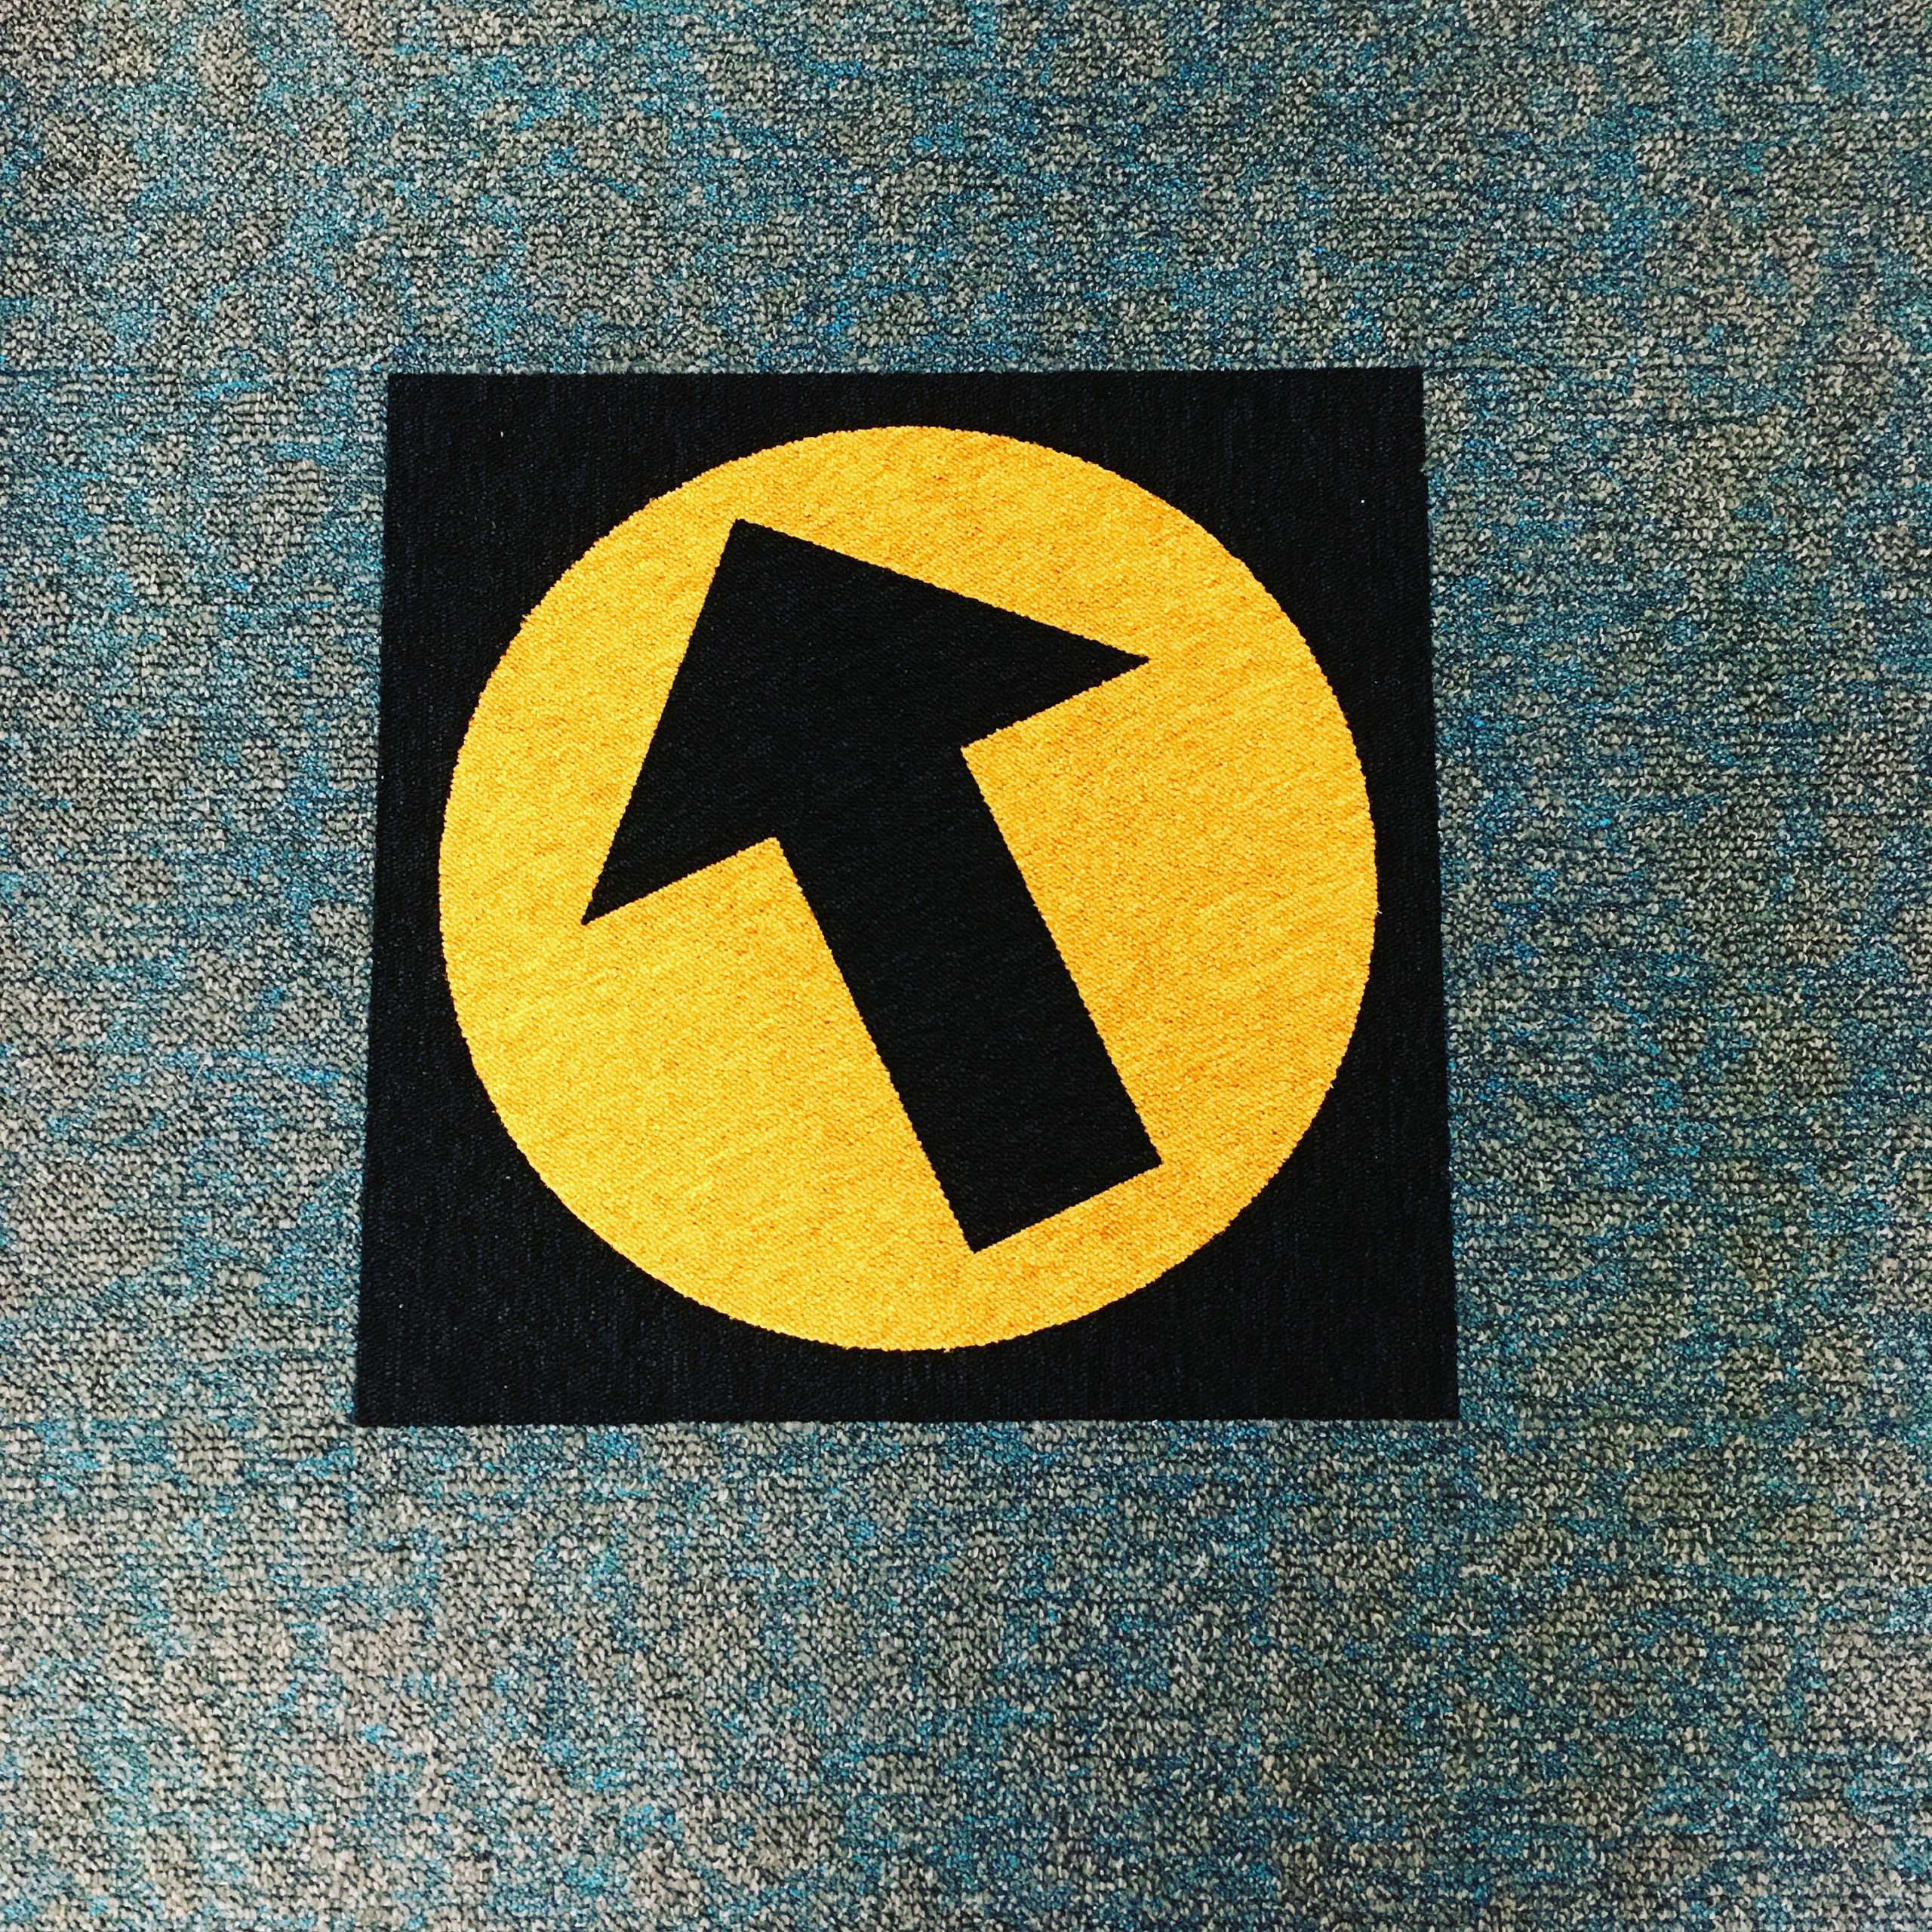 Wayfinding carpet tile replacement with black & yellow arrow